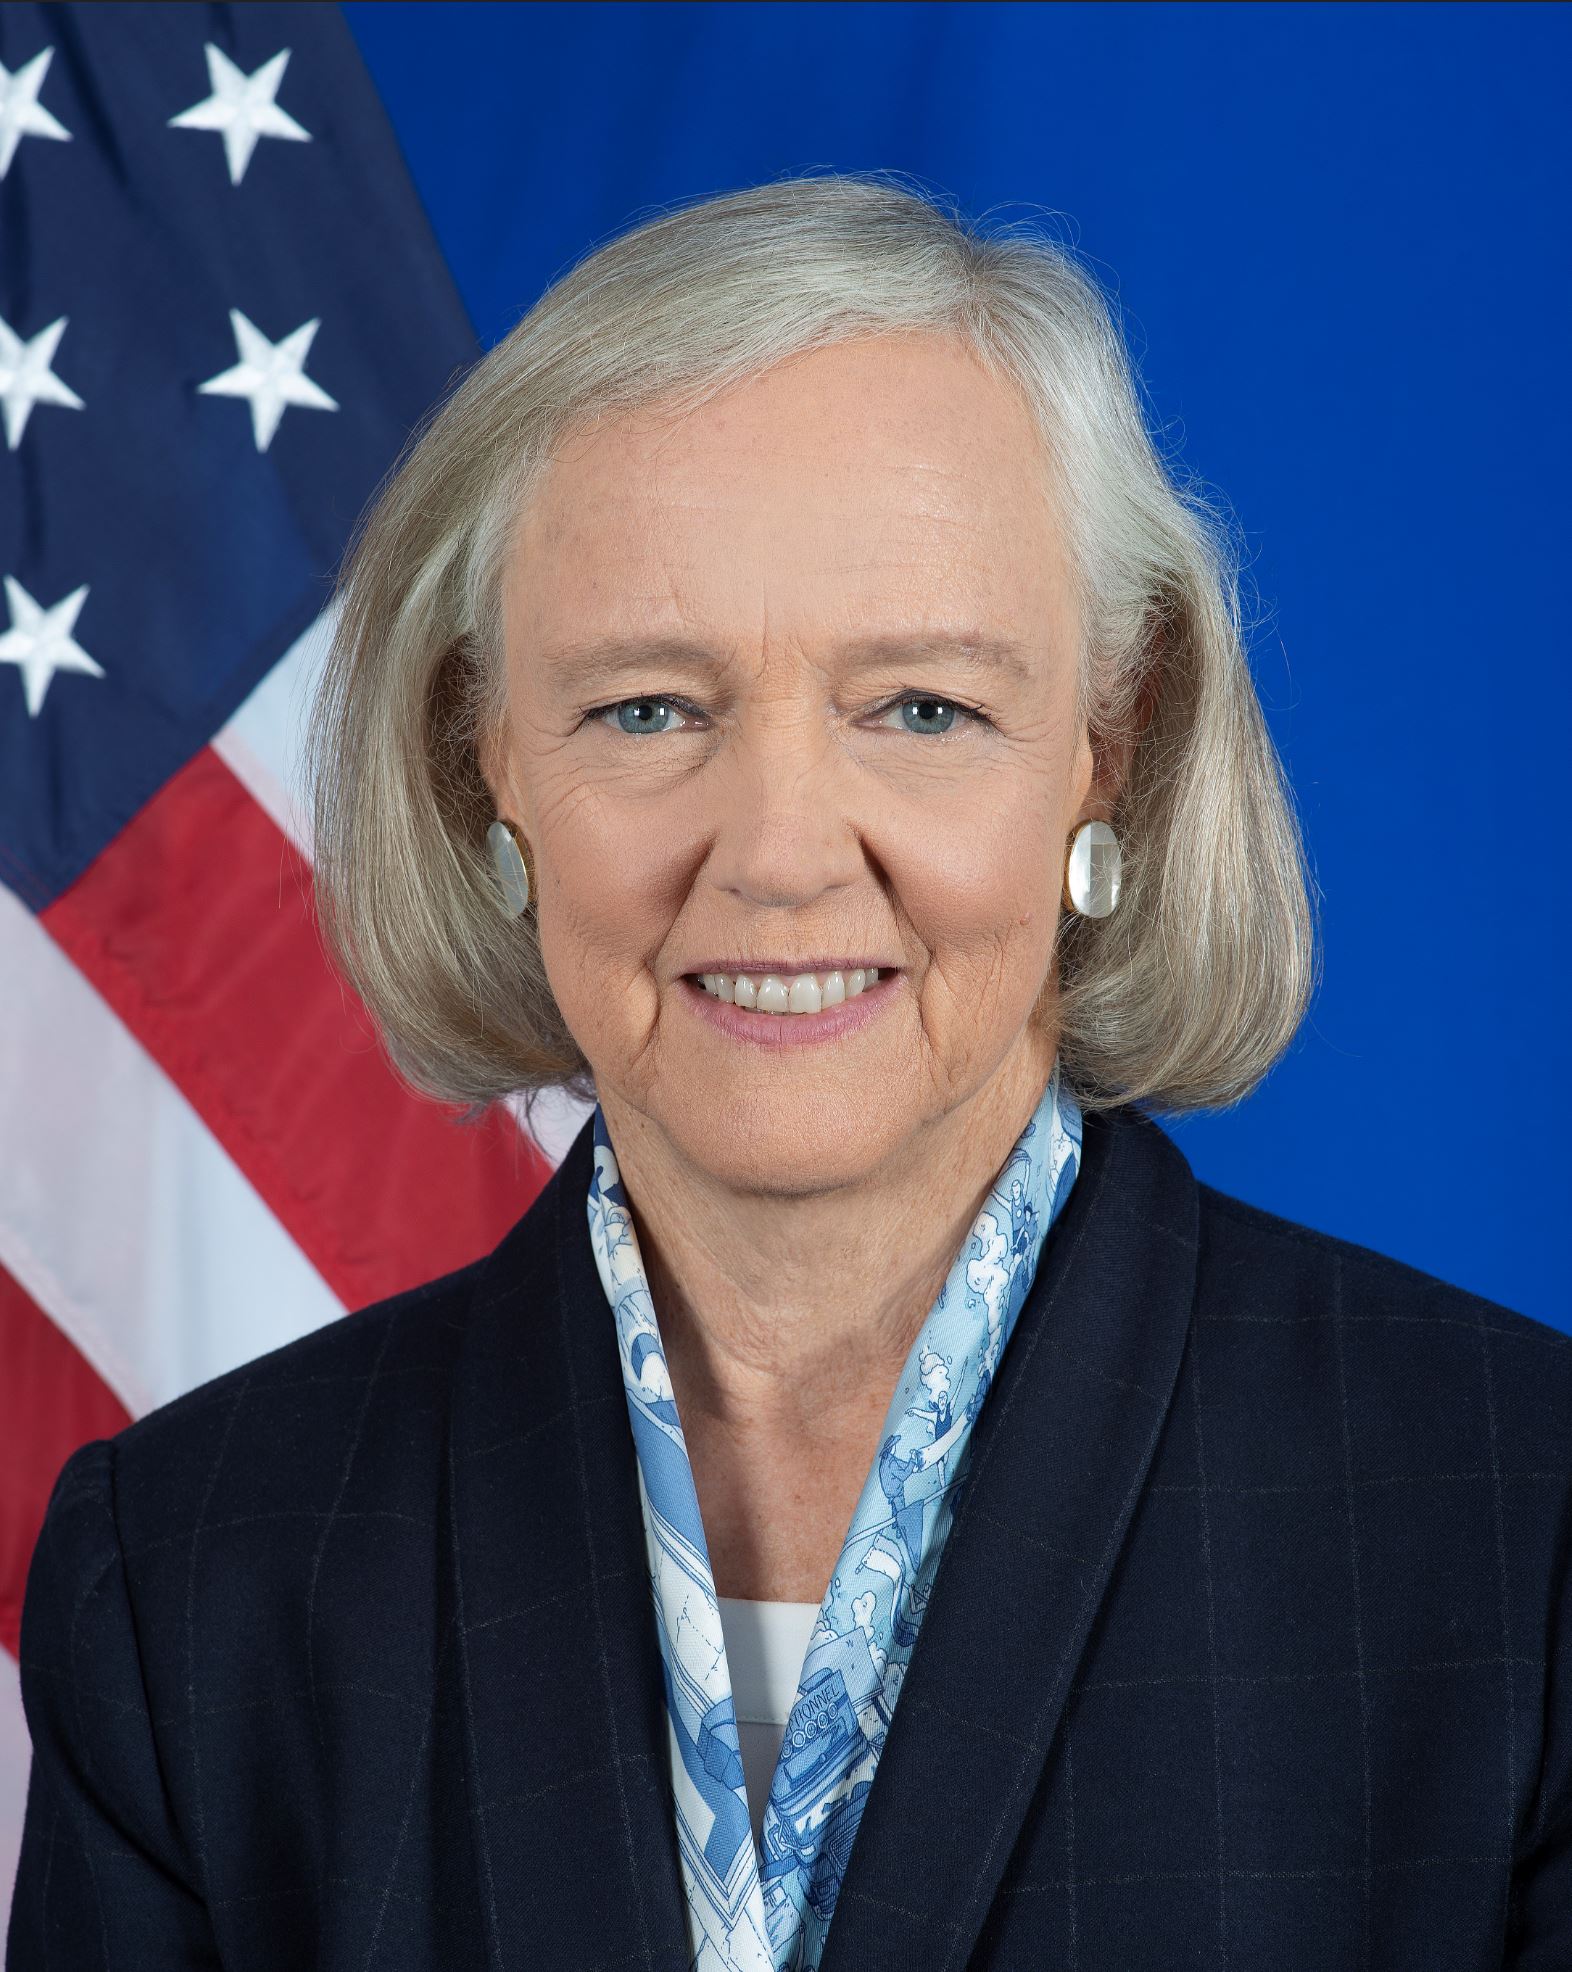 https://upload.wikimedia.org/wikipedia/commons/5/58/Meg_Whitman%2C_U.S._Ambassador.jpg